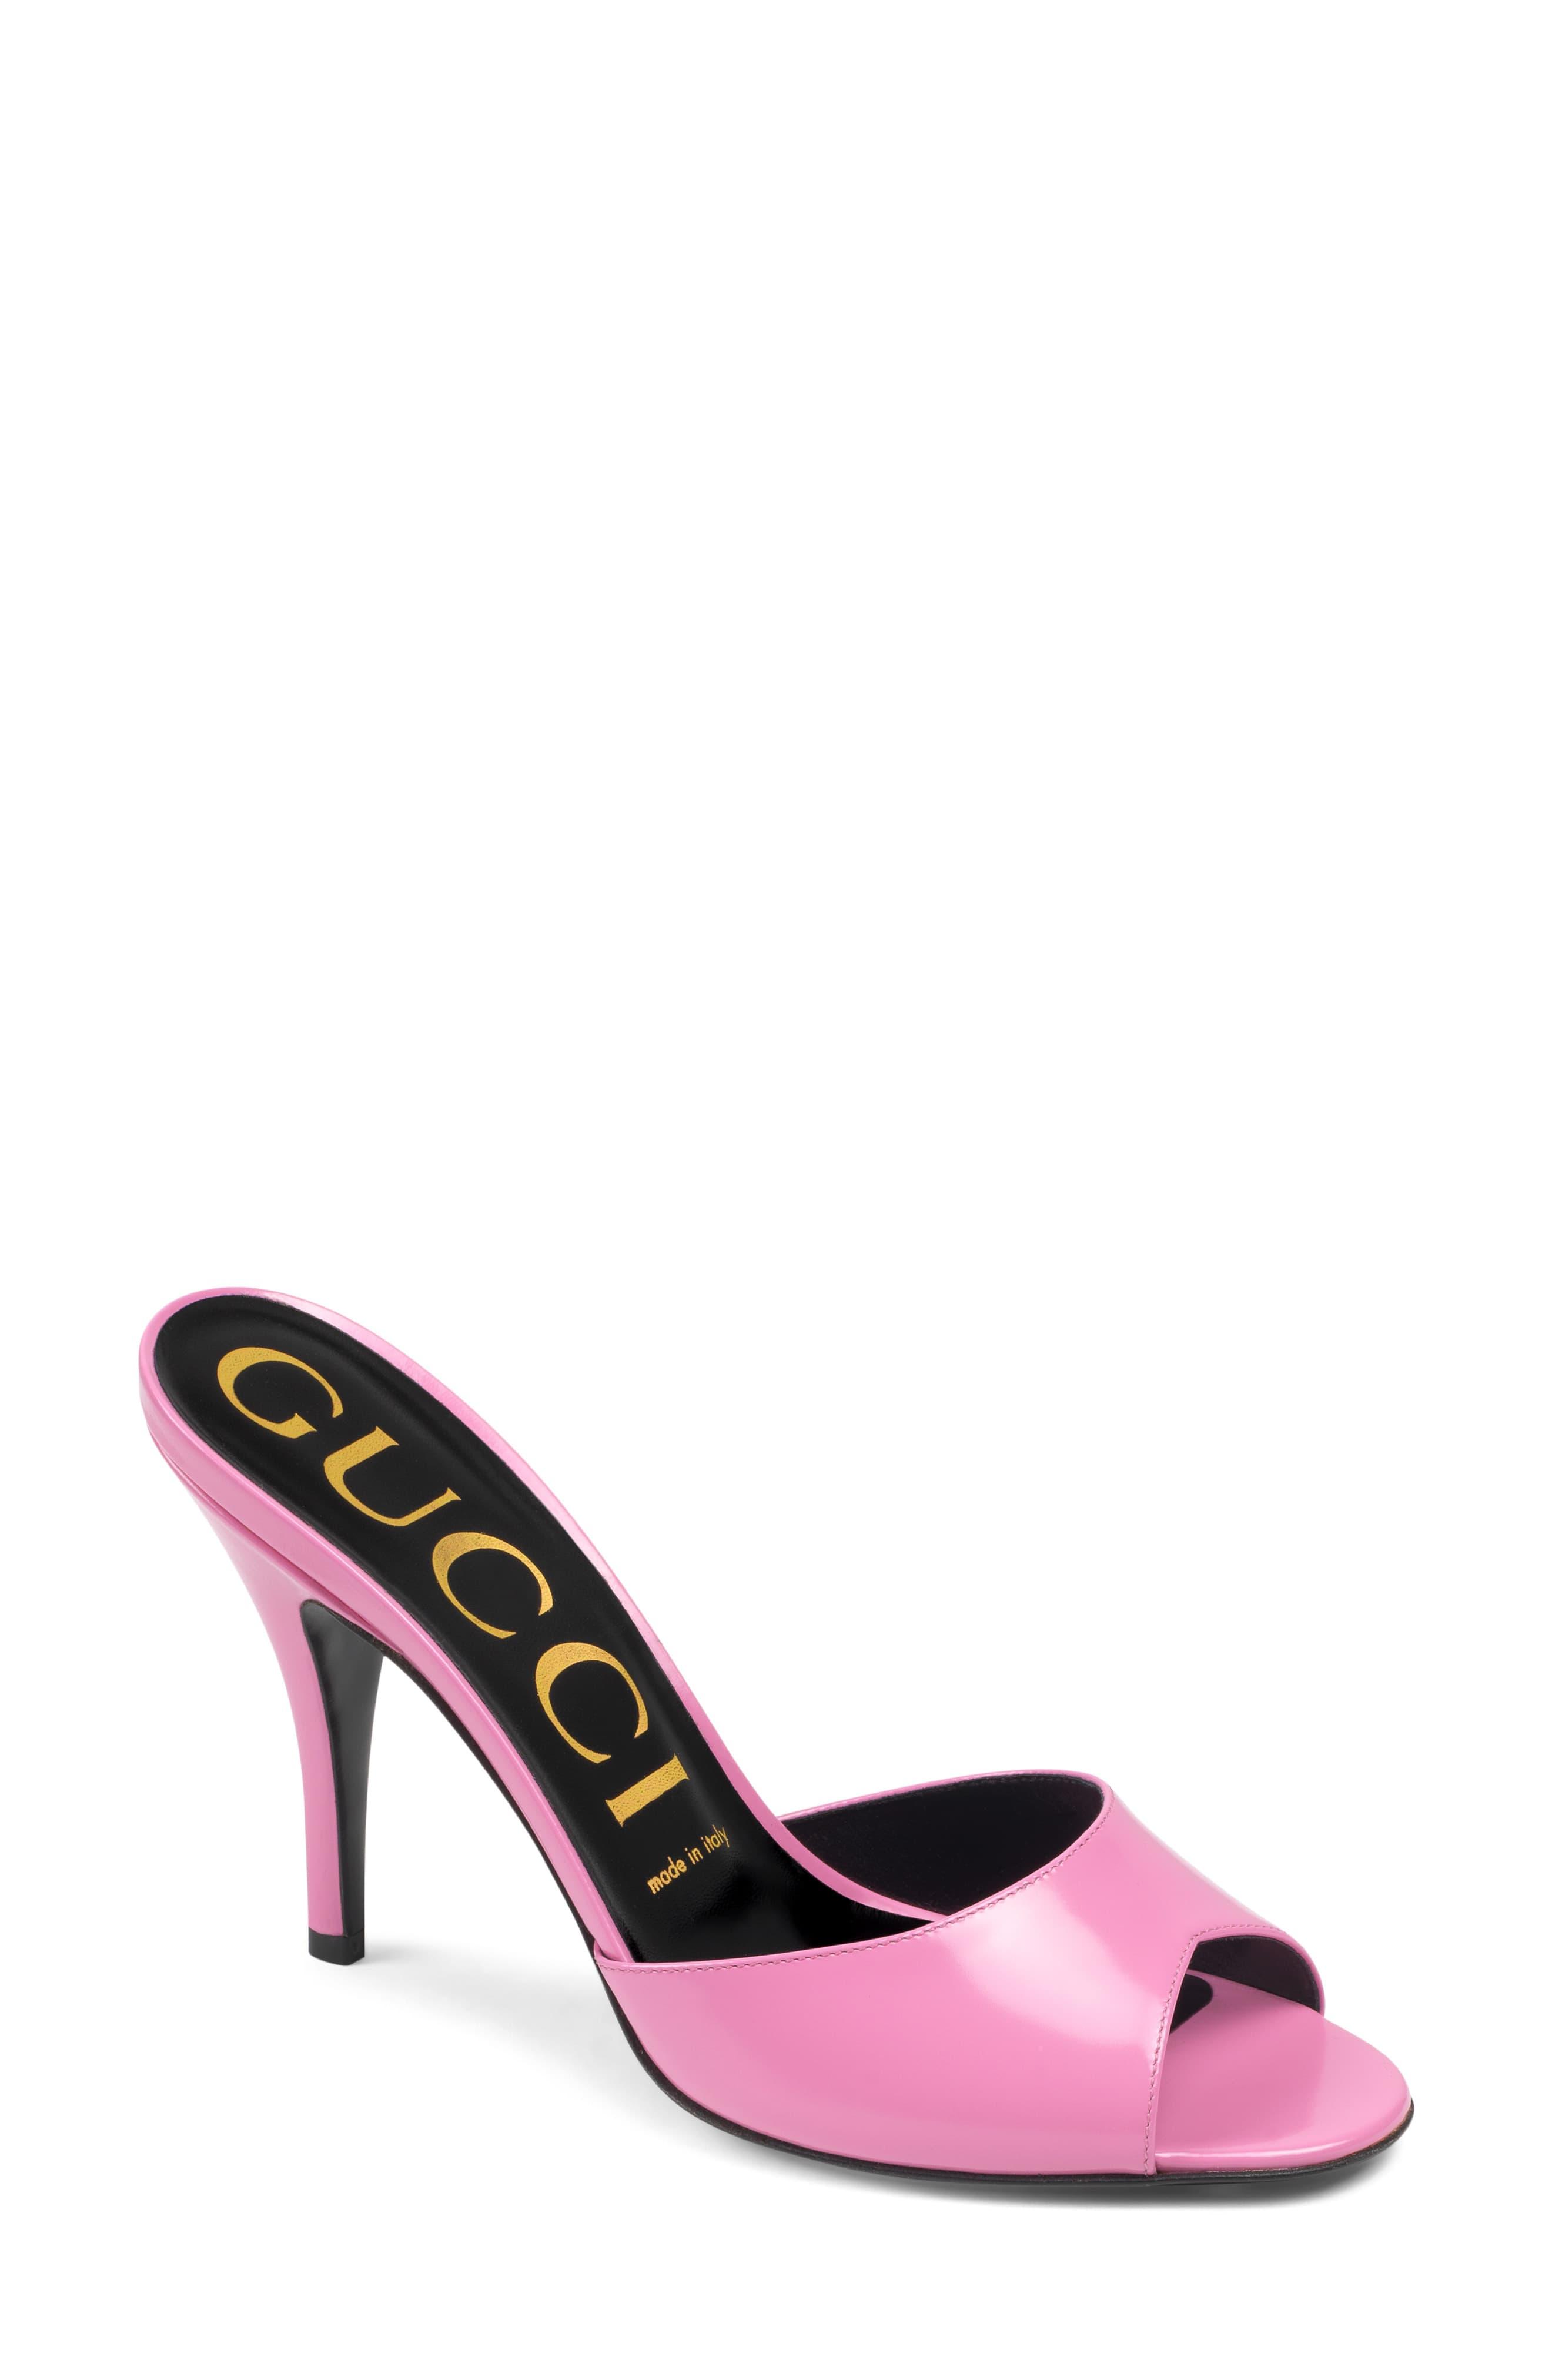 gucci pink high heels